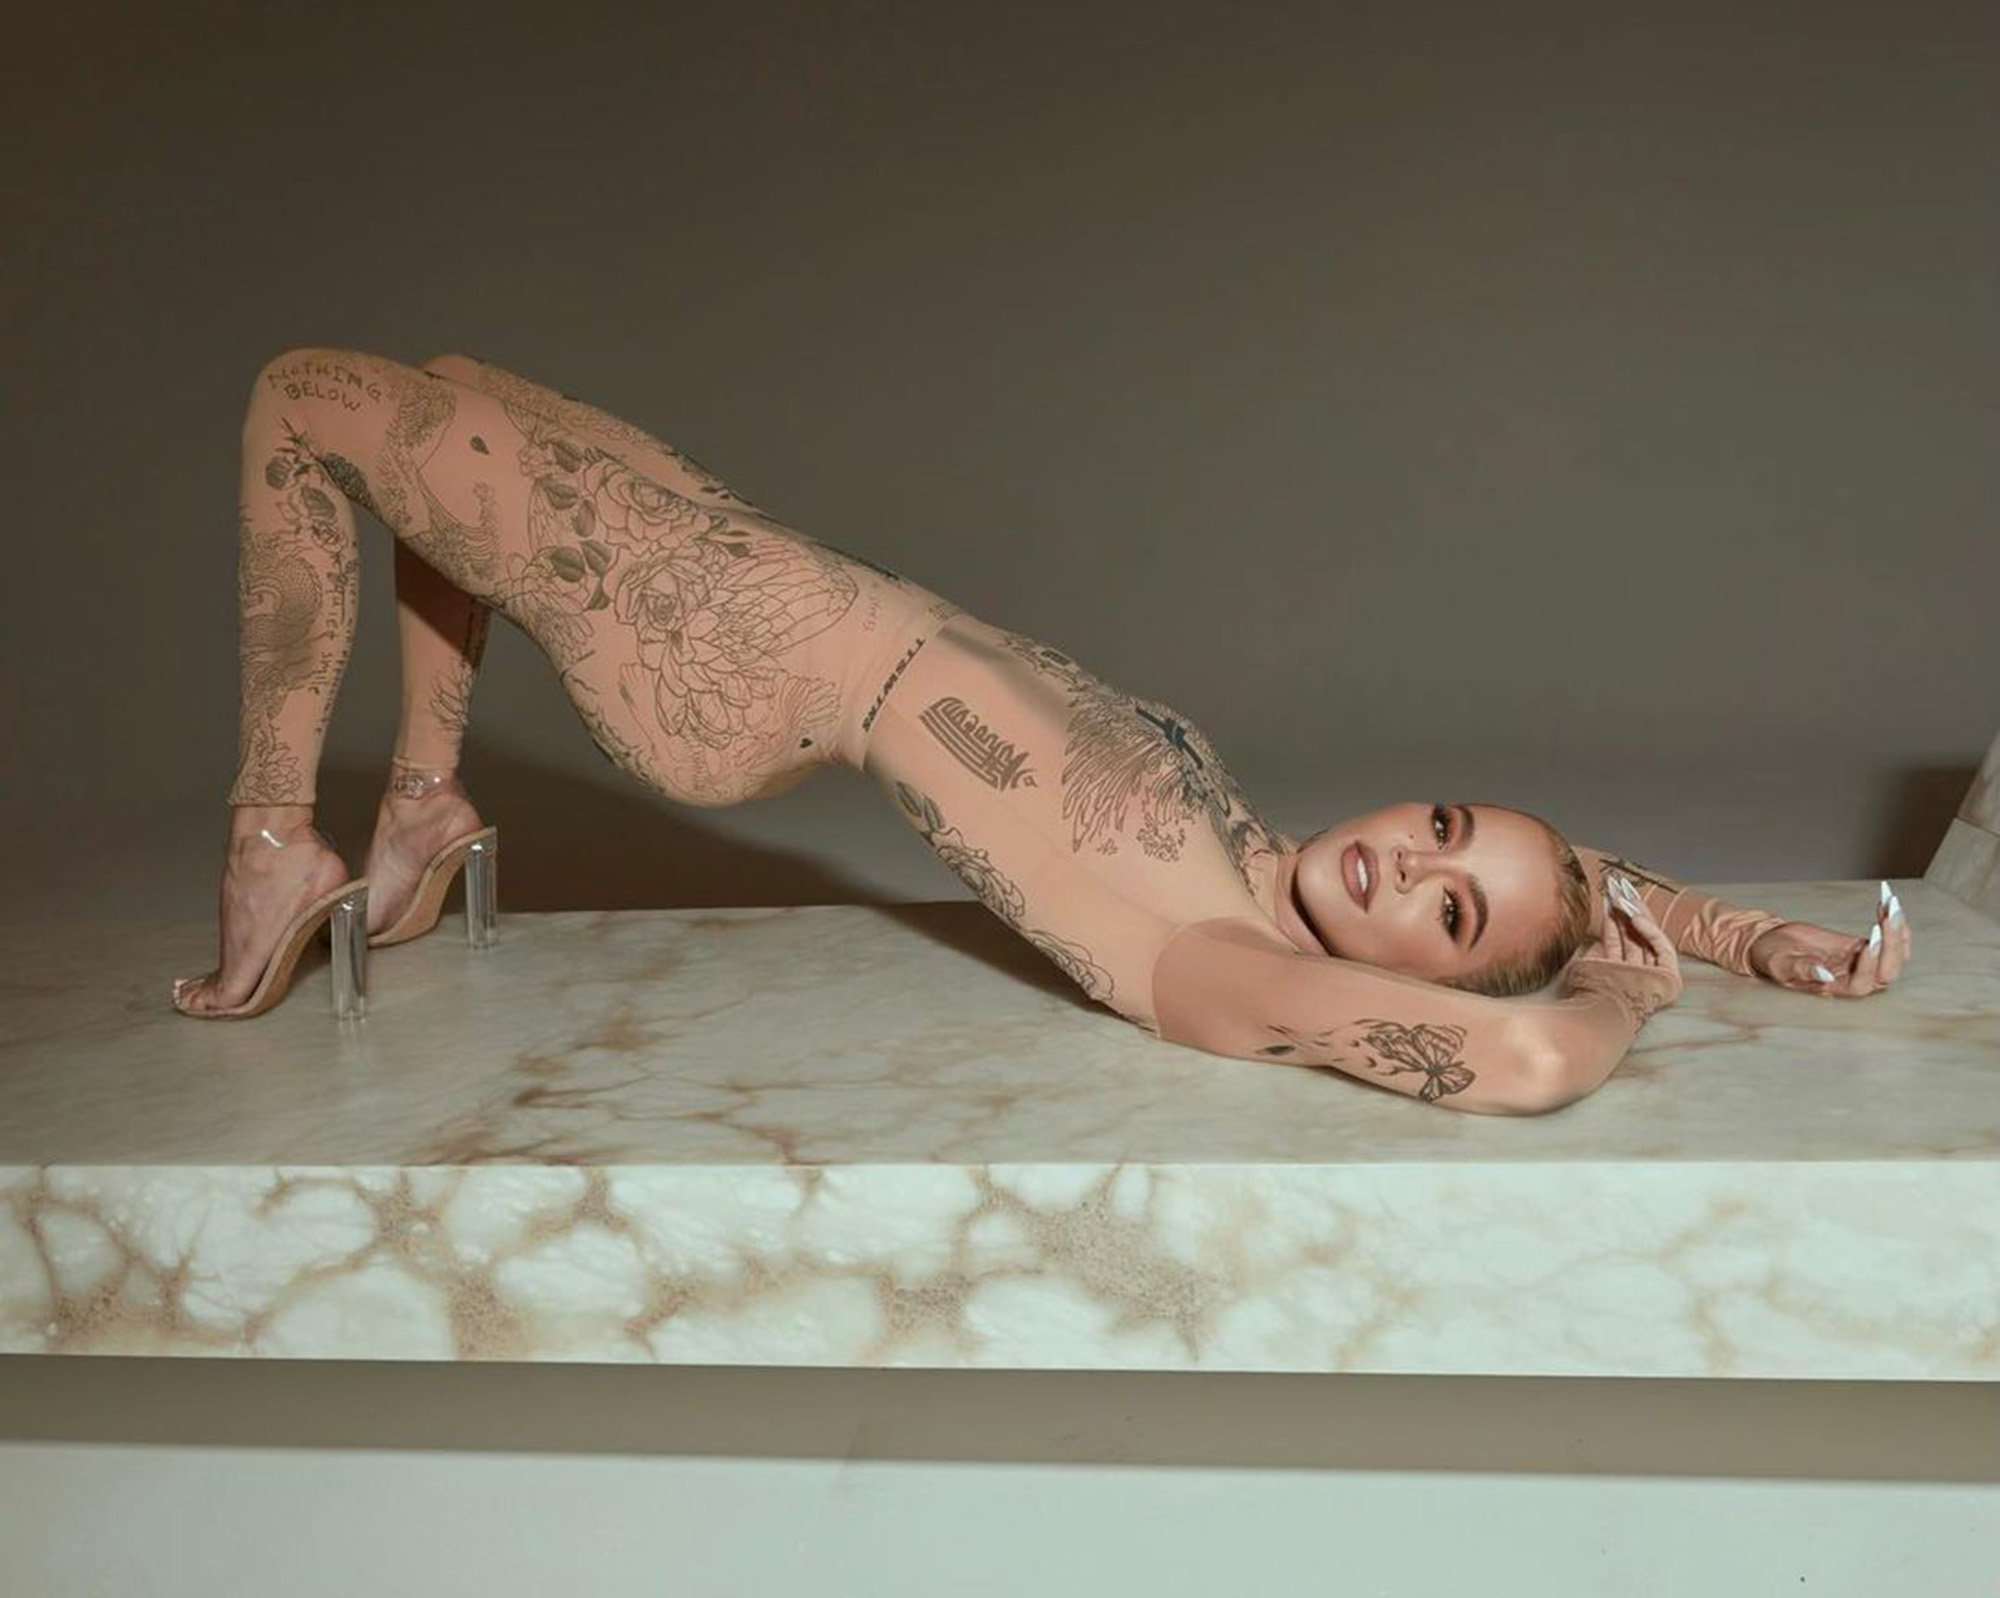 Best of Khloe kardashian naked shoot